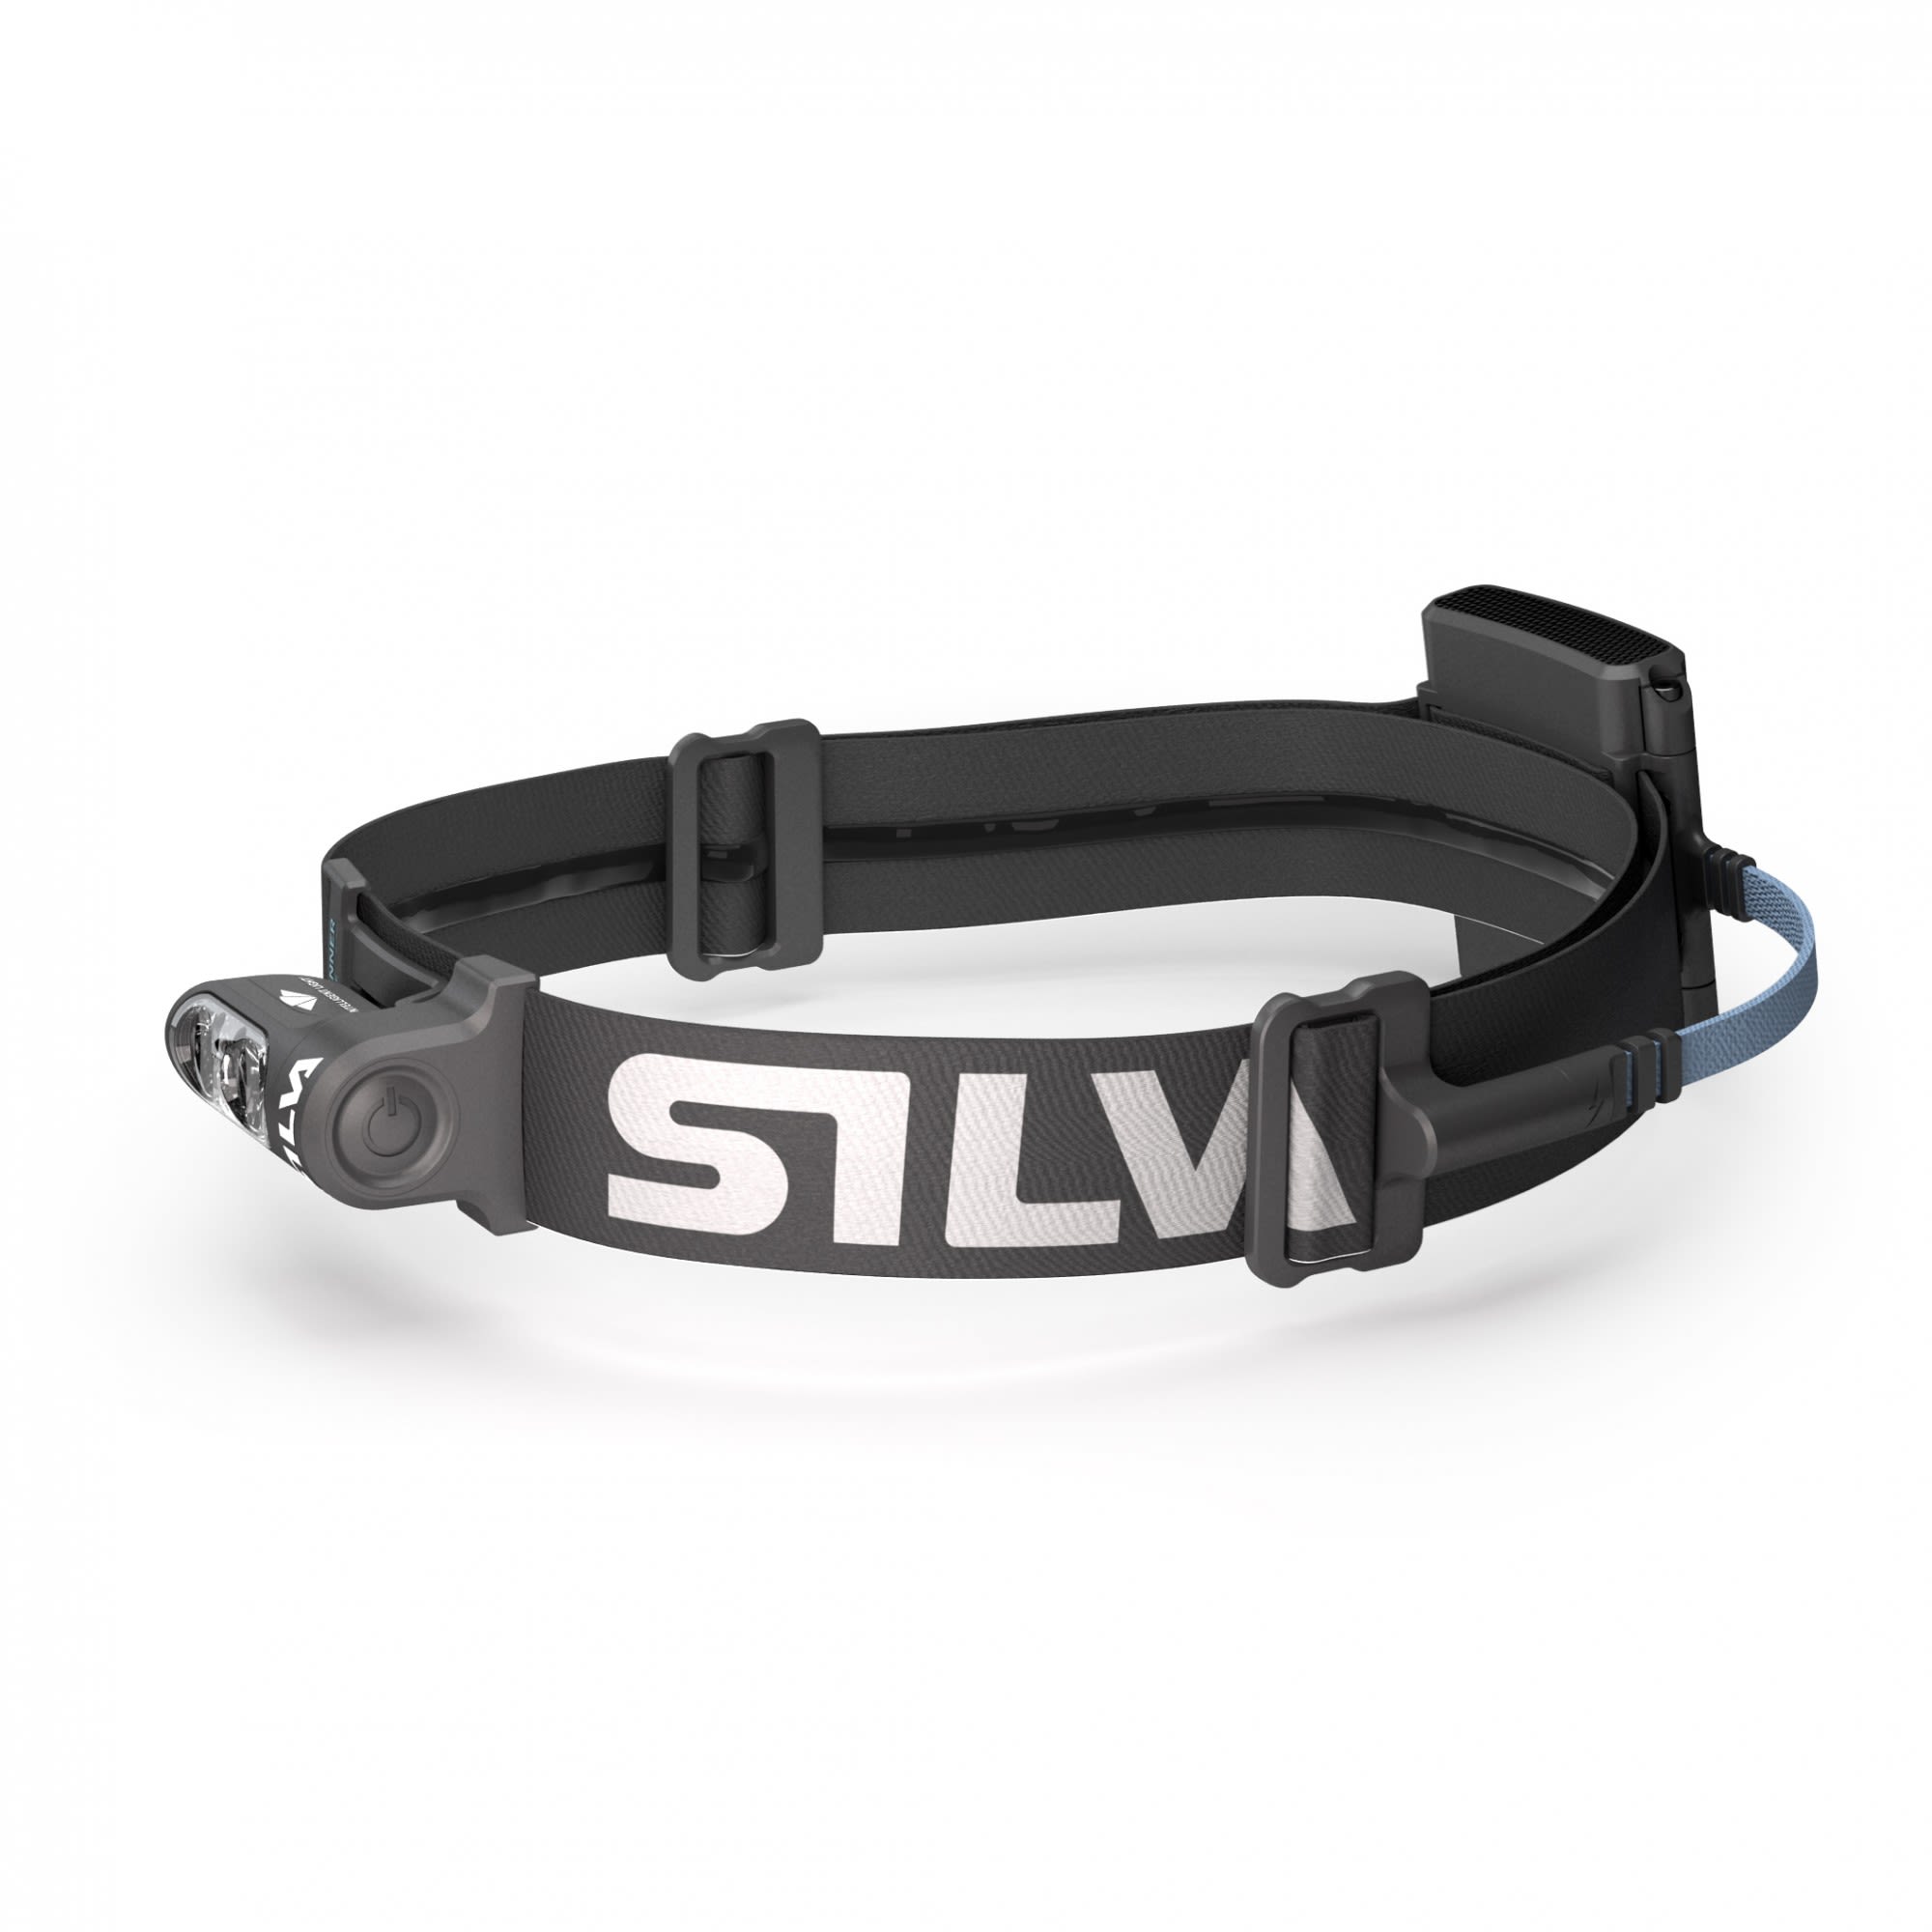 Silva Trail Runner Free Grau- Stirnlampen- Grsse One Size - Farbe Anthracite unter Silva